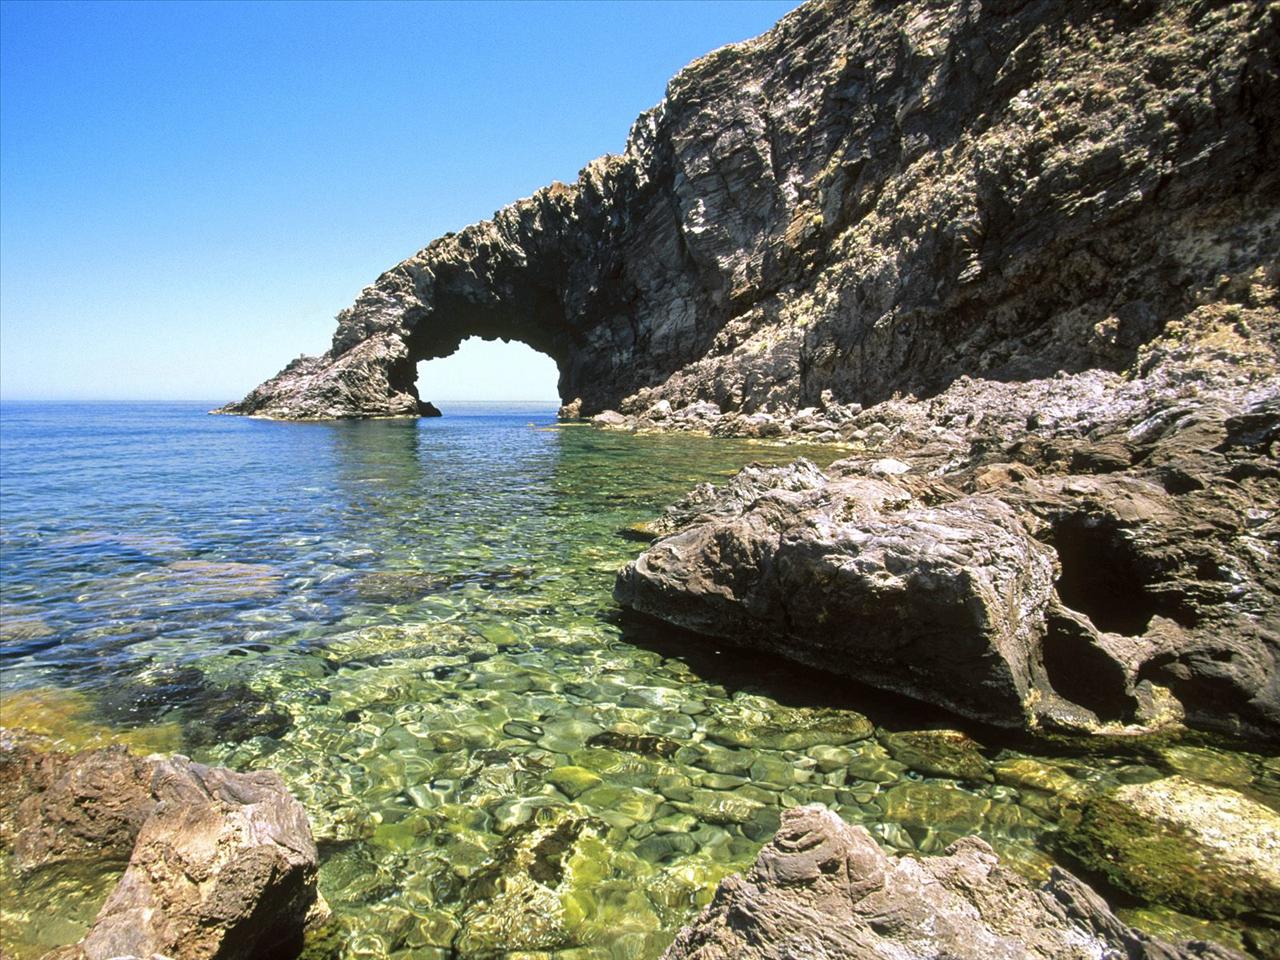  Włochy - Arco delElefante, Pantelleria Island, Sicily, Italy.jpg